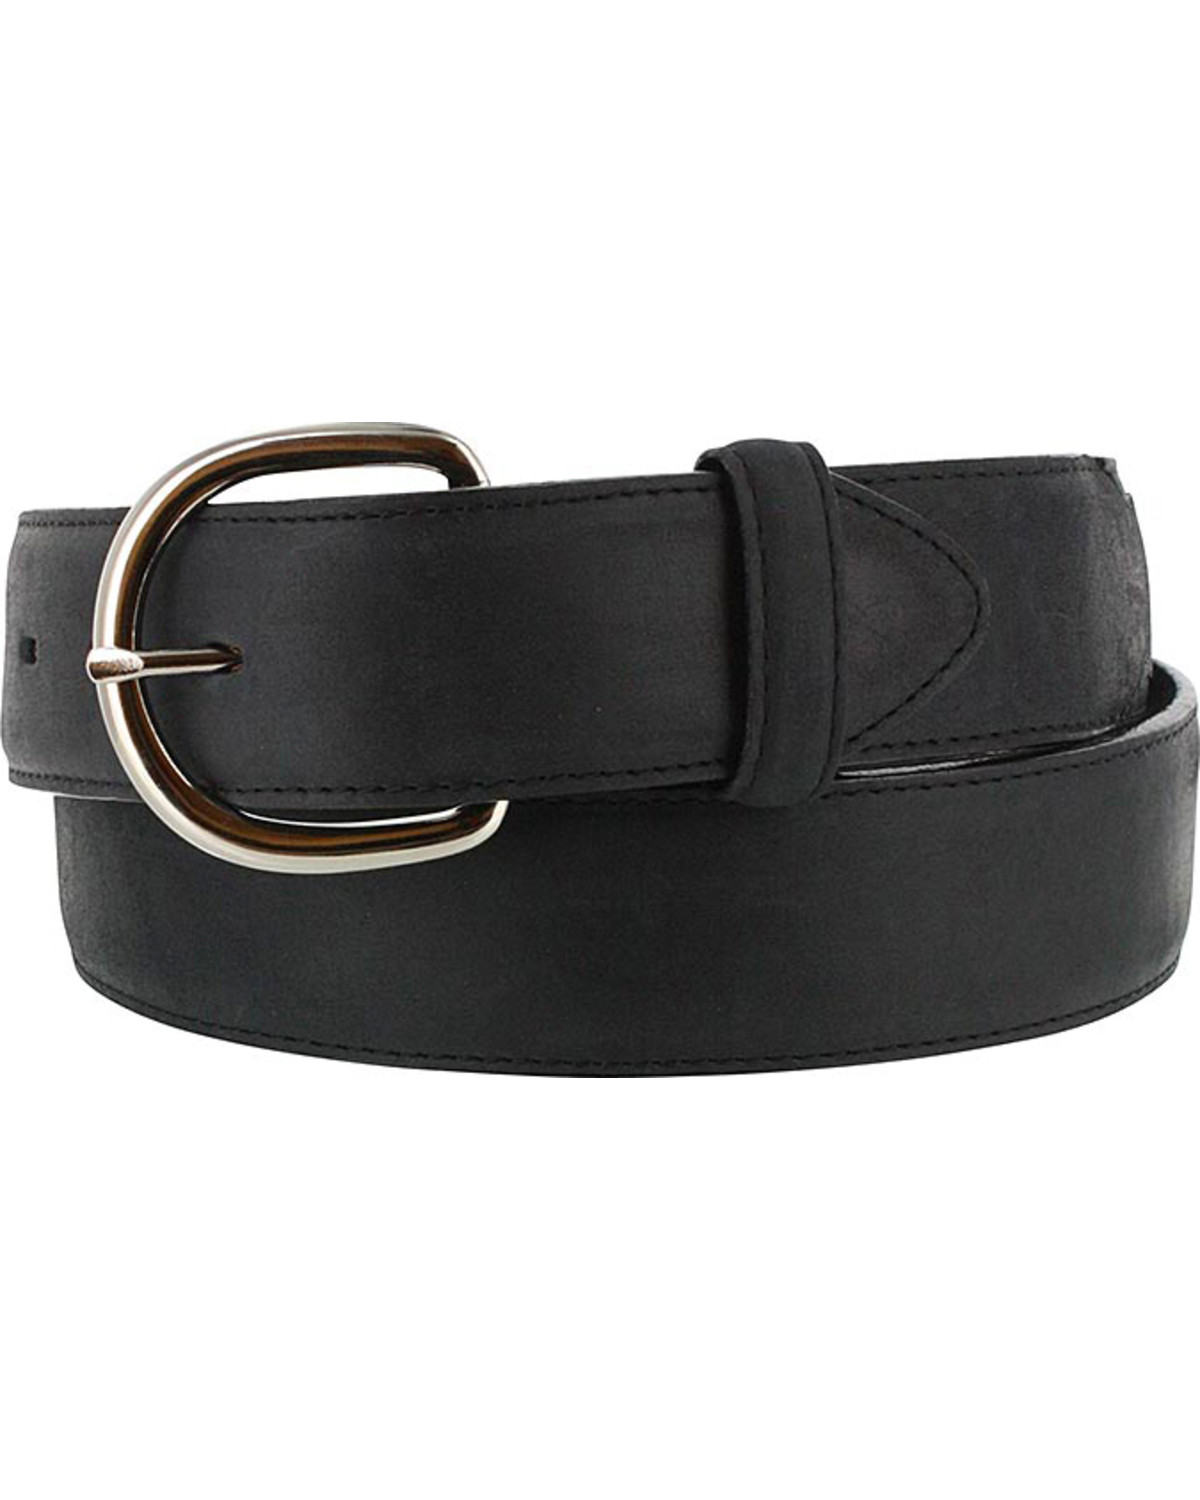 Justin Men's Leather Overlay Belt